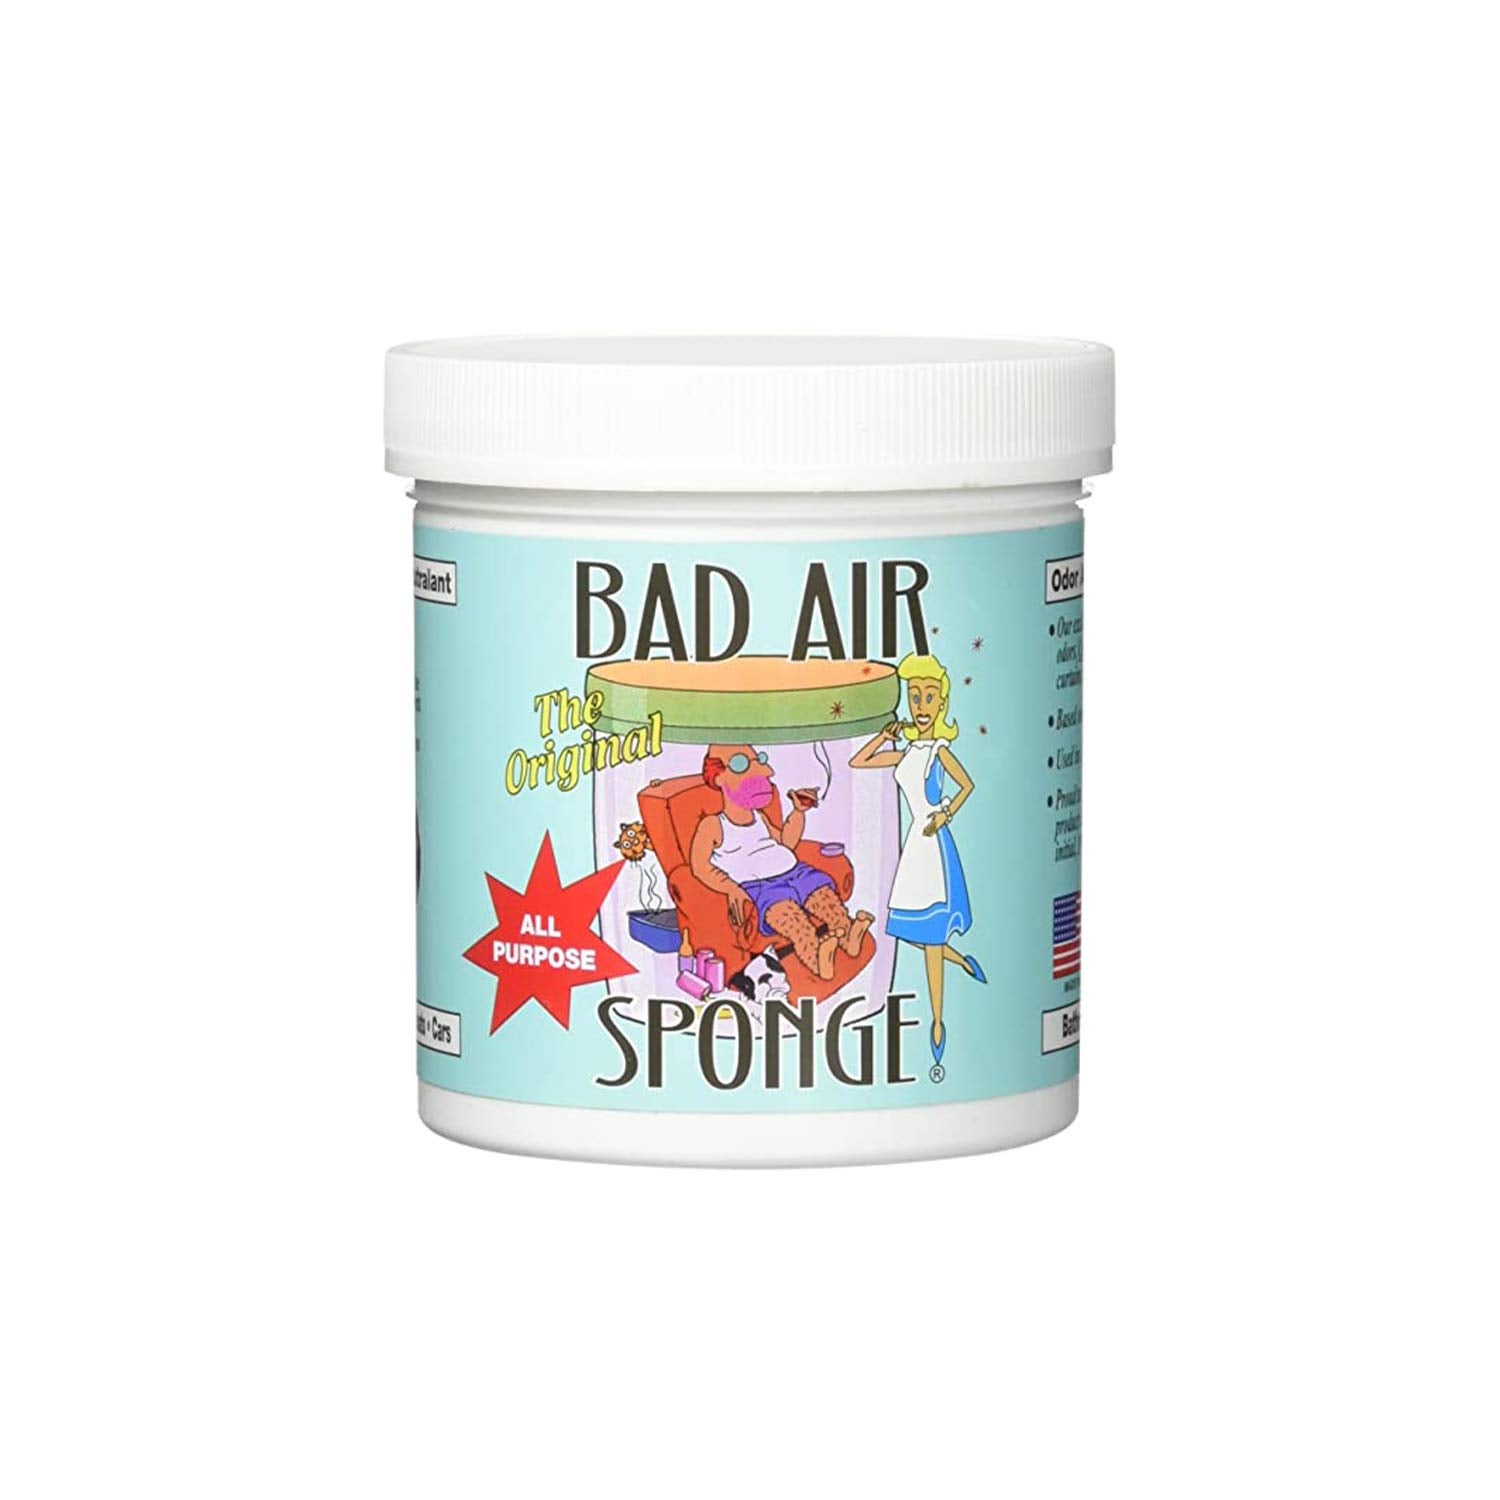 Bad Air Sponge + Bad Air Sponge The ORIGINAL Odor Absorbing Neutralant,  14oz(Packaging May Vary)